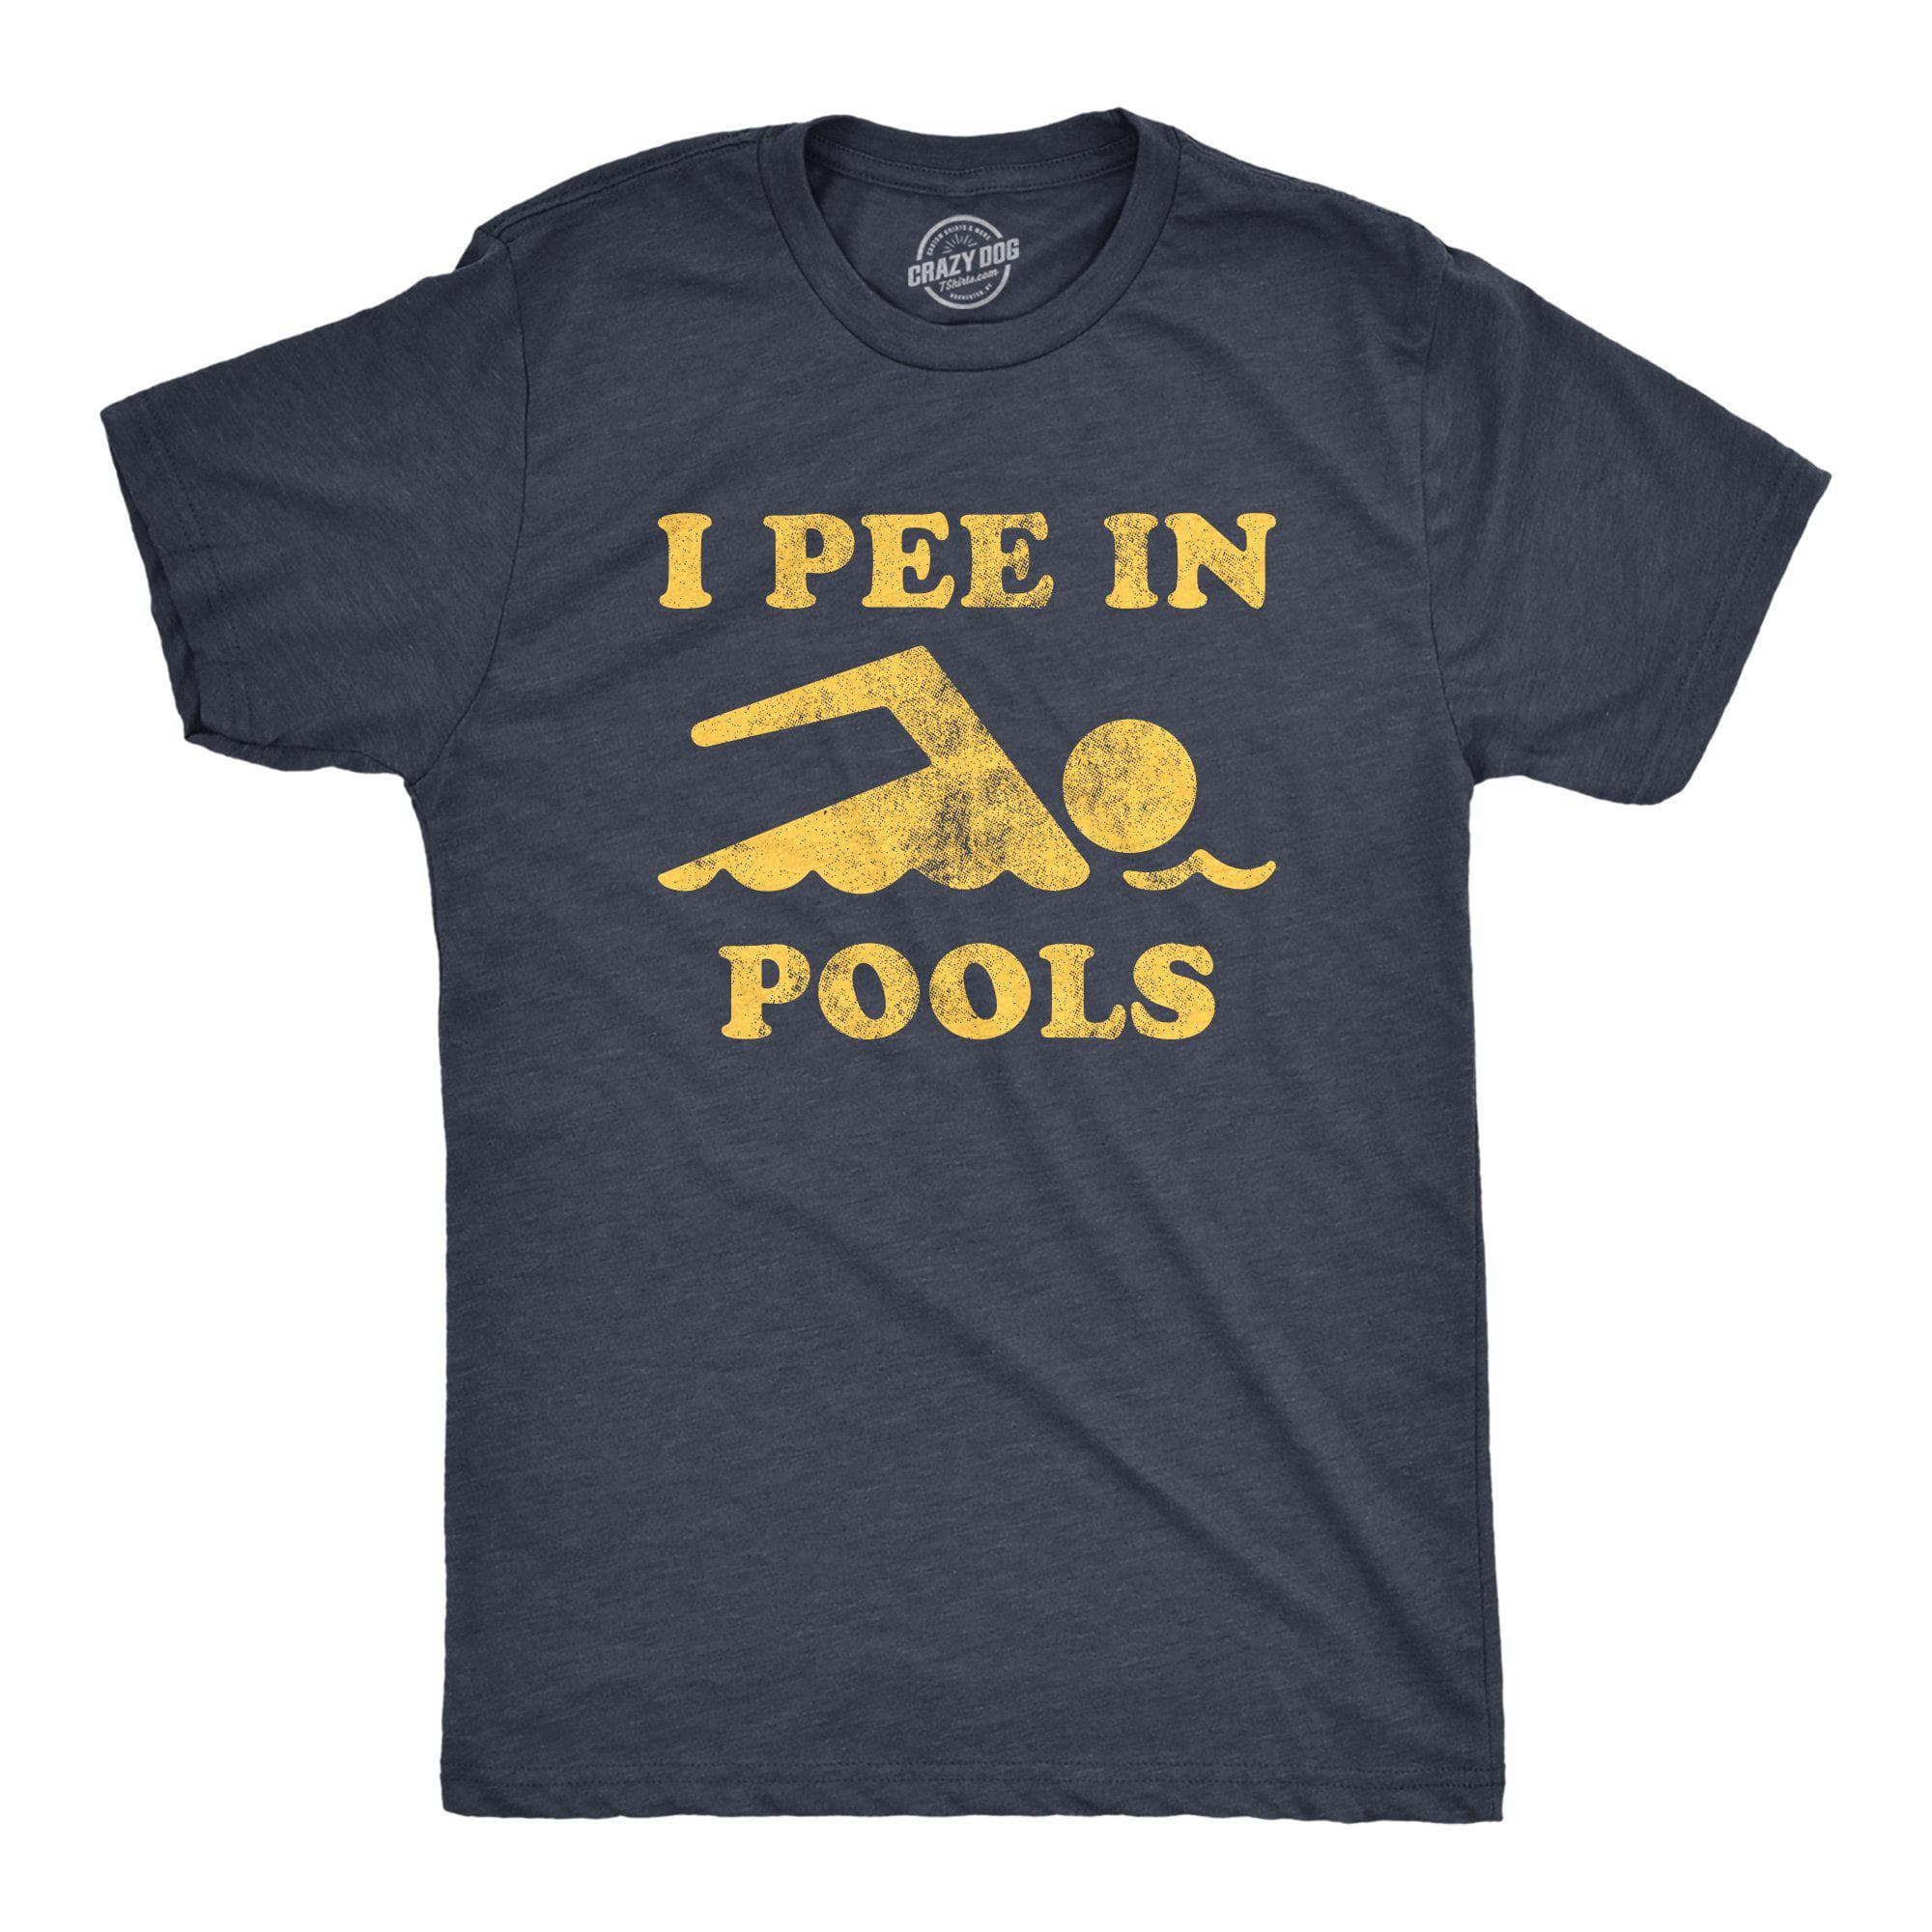 I Pee In Pools Men's Tshirt - Crazy Dog T-Shirts